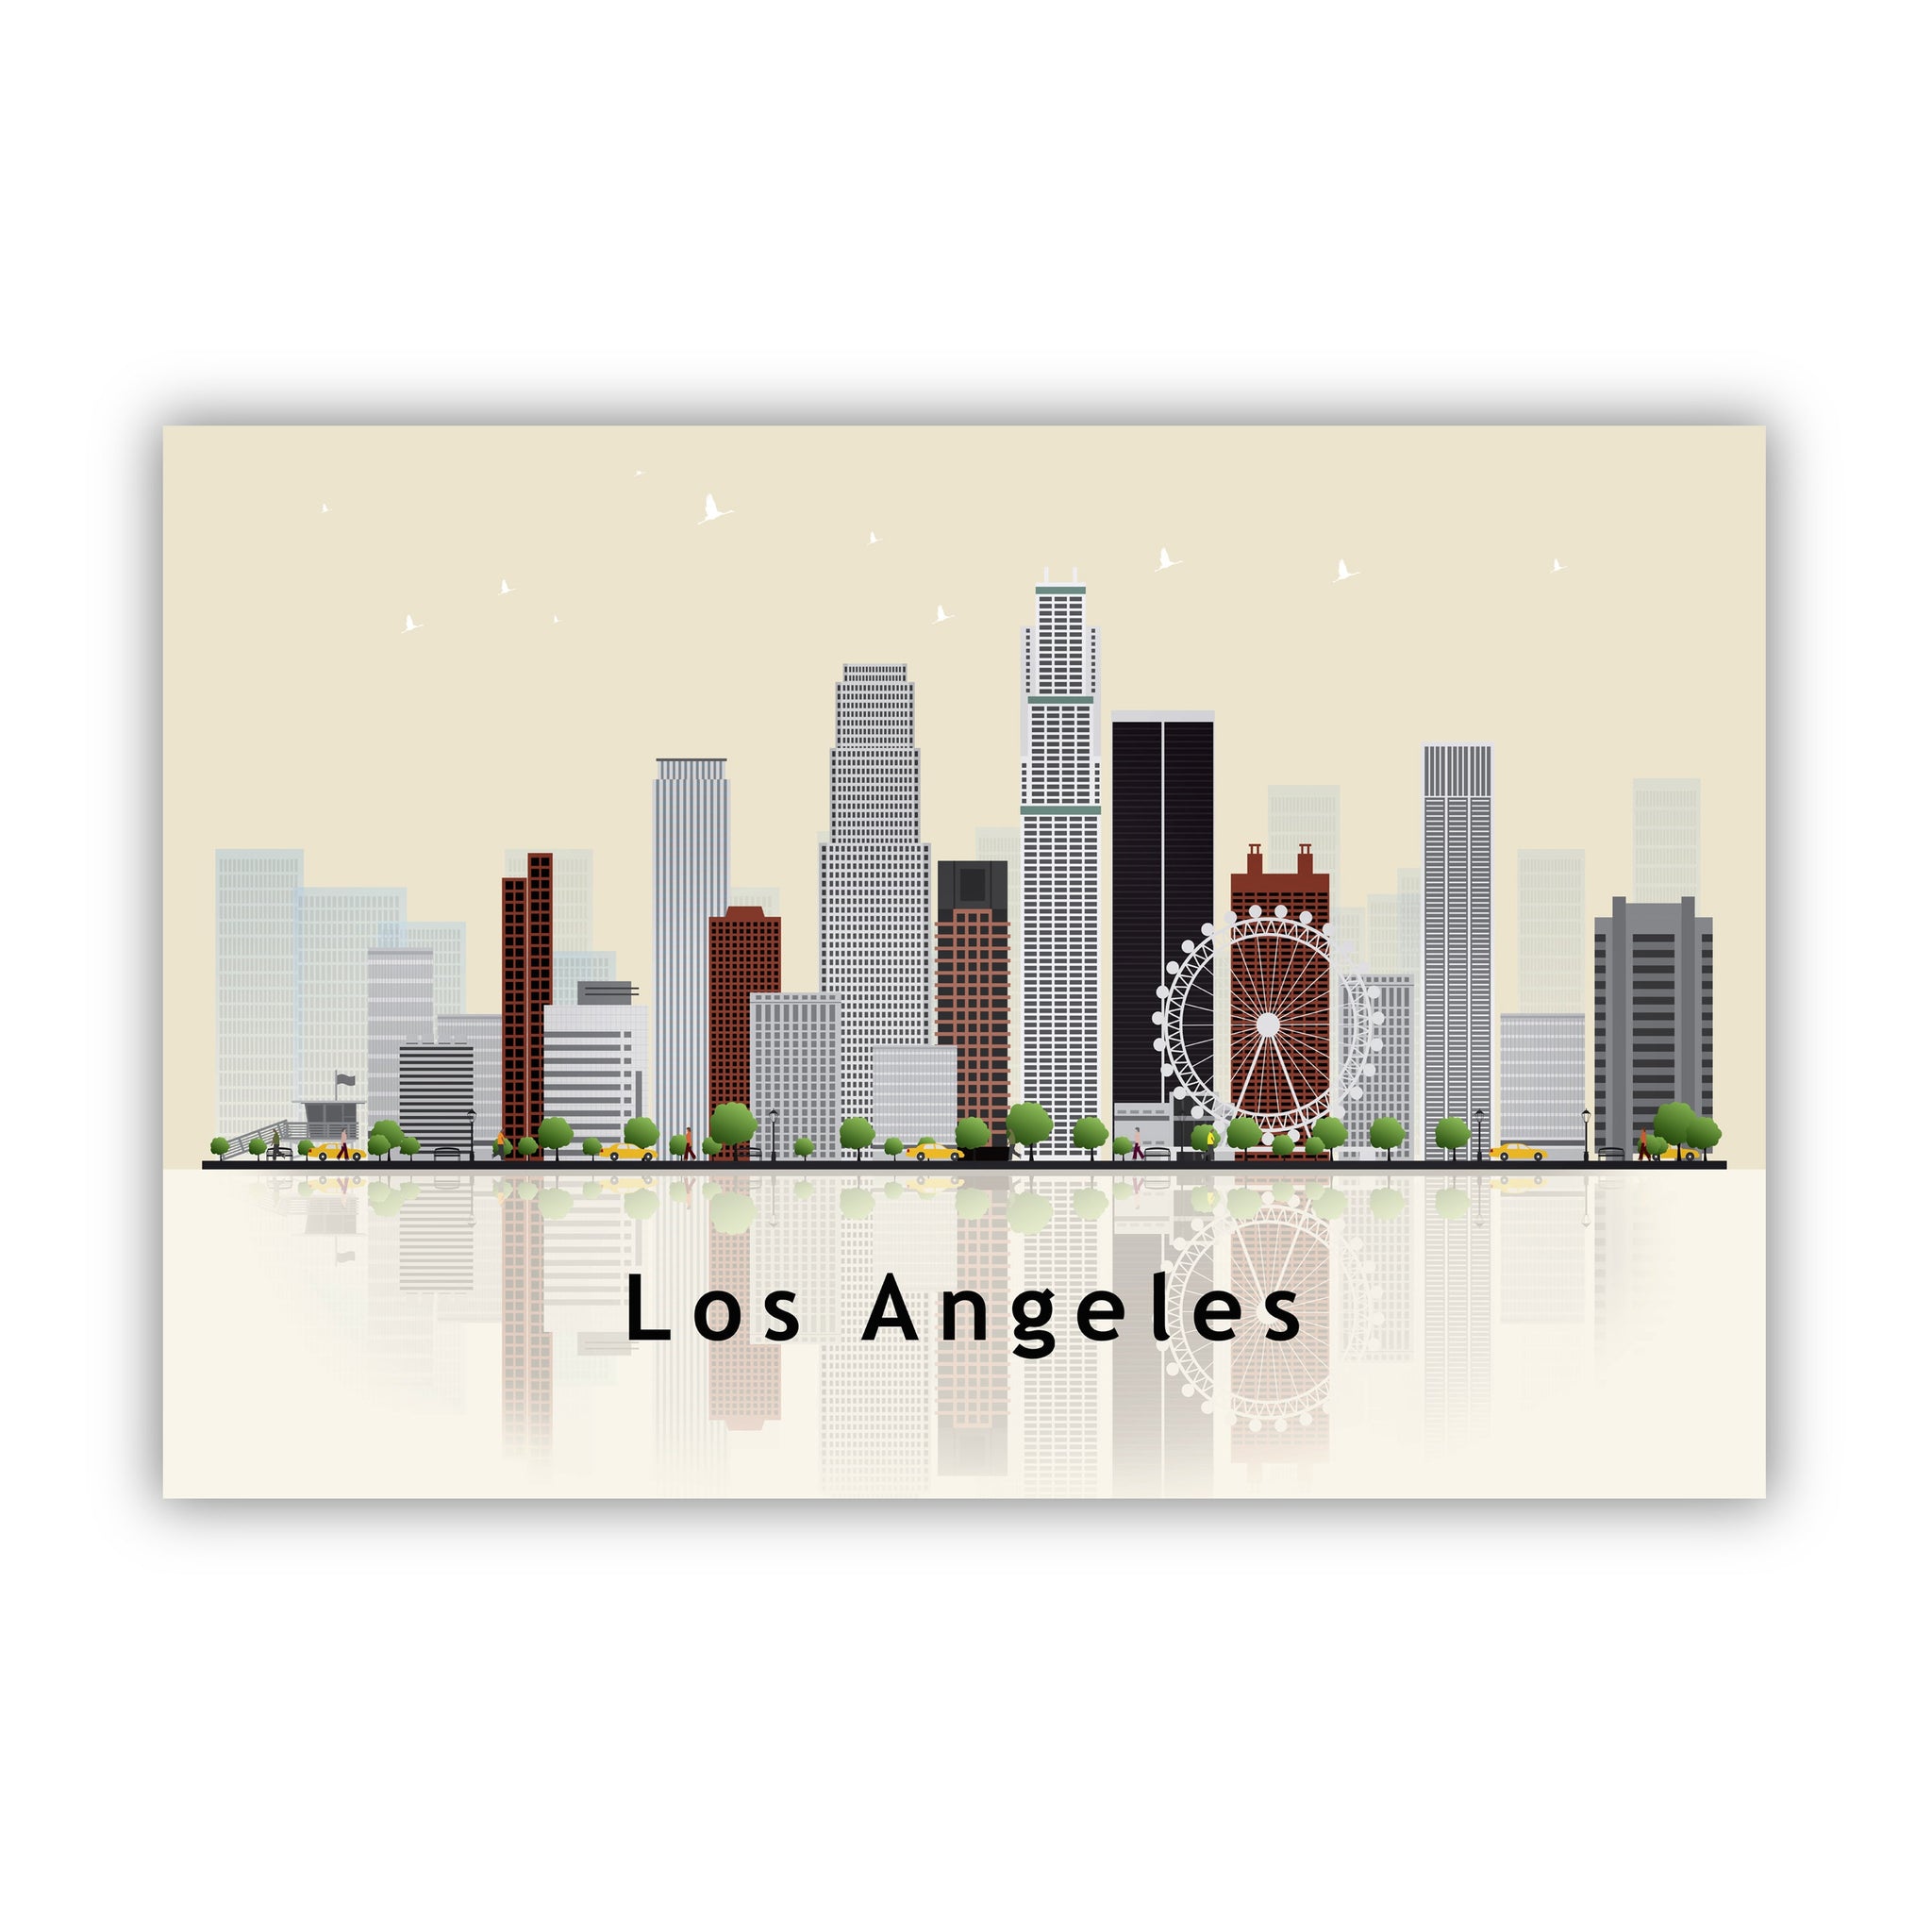 LOS ANGELES CALIFORNIA Illustration skyline poster, California state modern skyline cityscape poster, Landmark poster, Home wall decoration